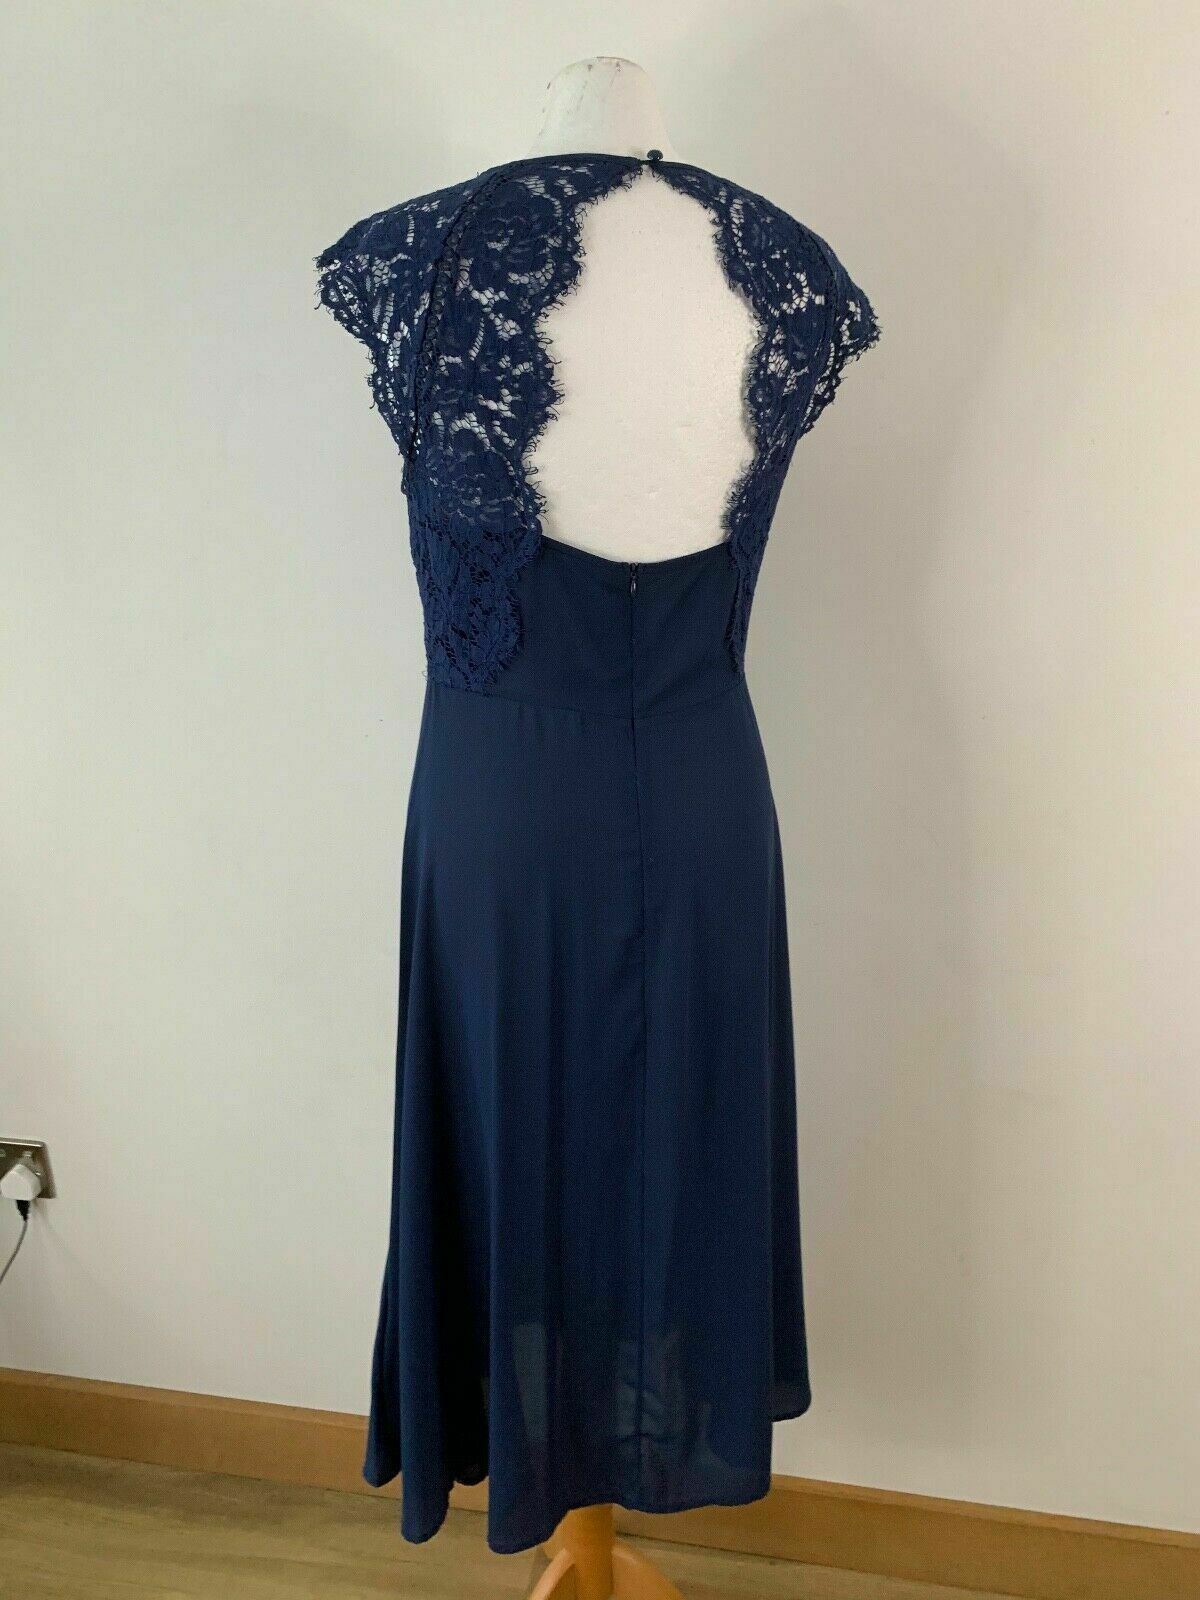 SHEIN Cutout Zipper Back Lace Bodice Flare Blue Dress Size M 10